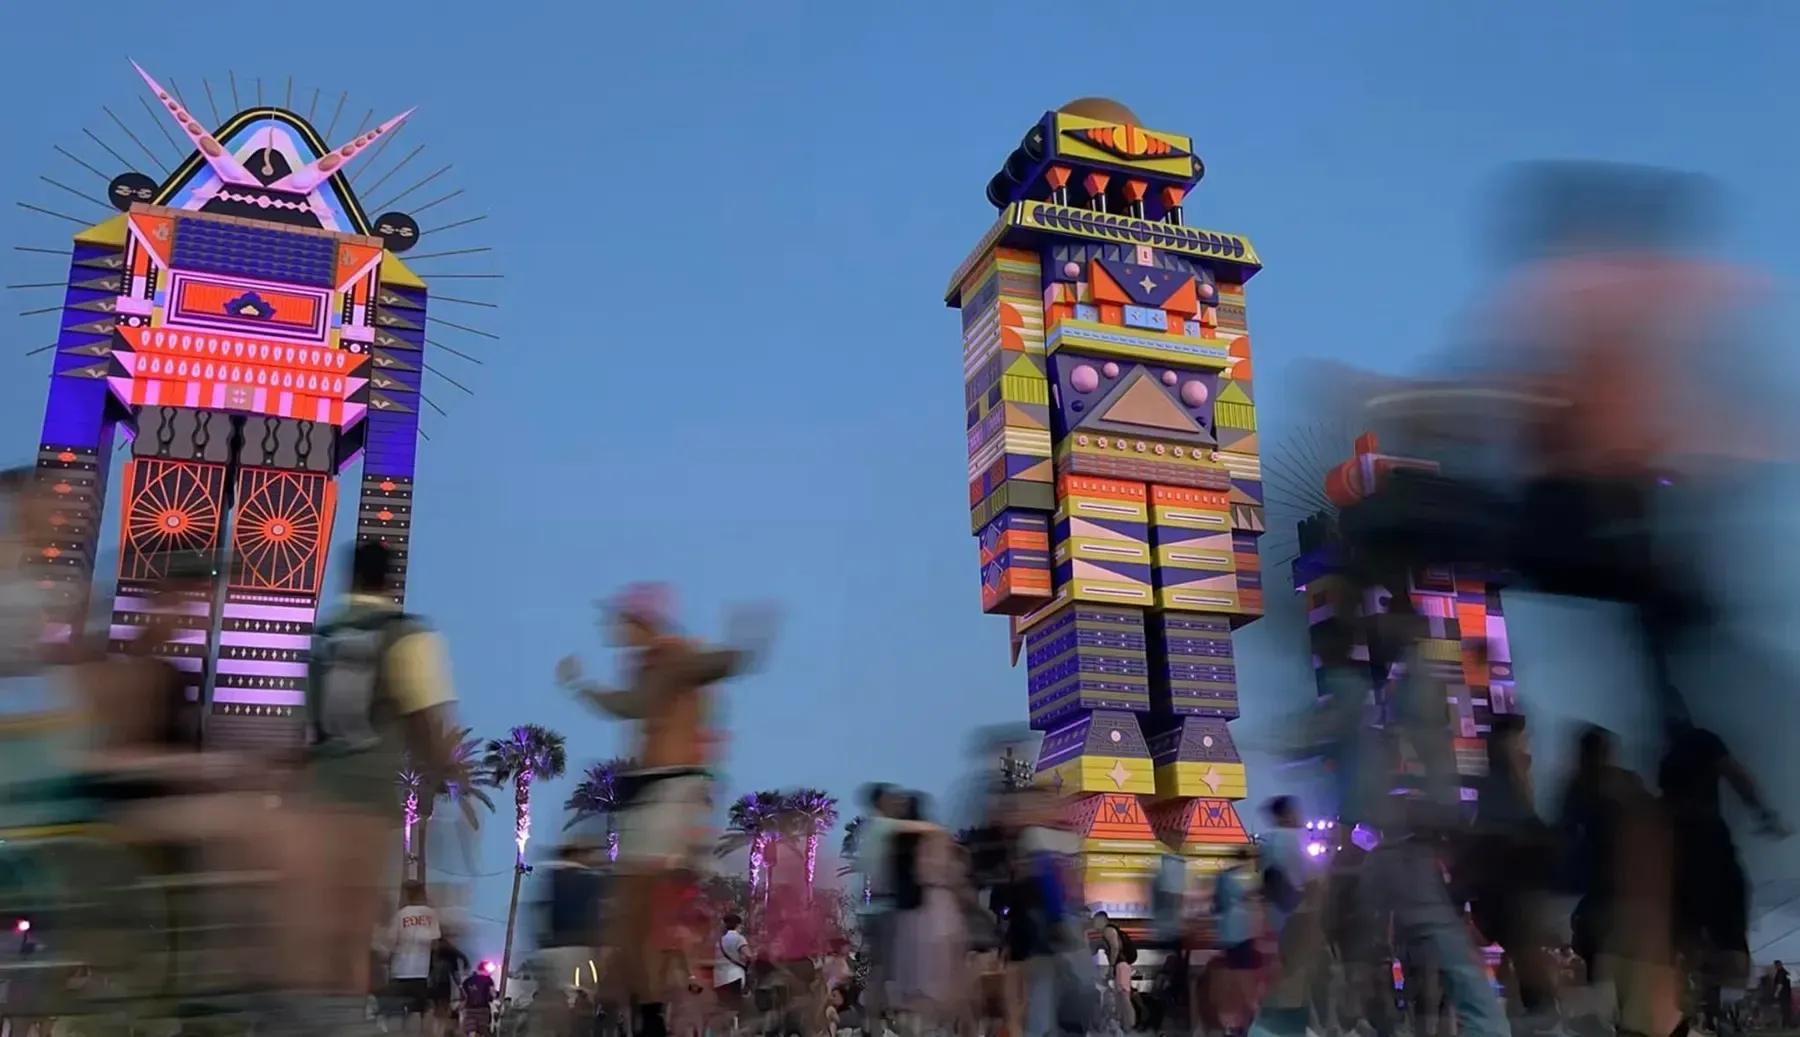 kumkum fernando giant robots artworks at Coachella festival , artist feature about his work, and ideas